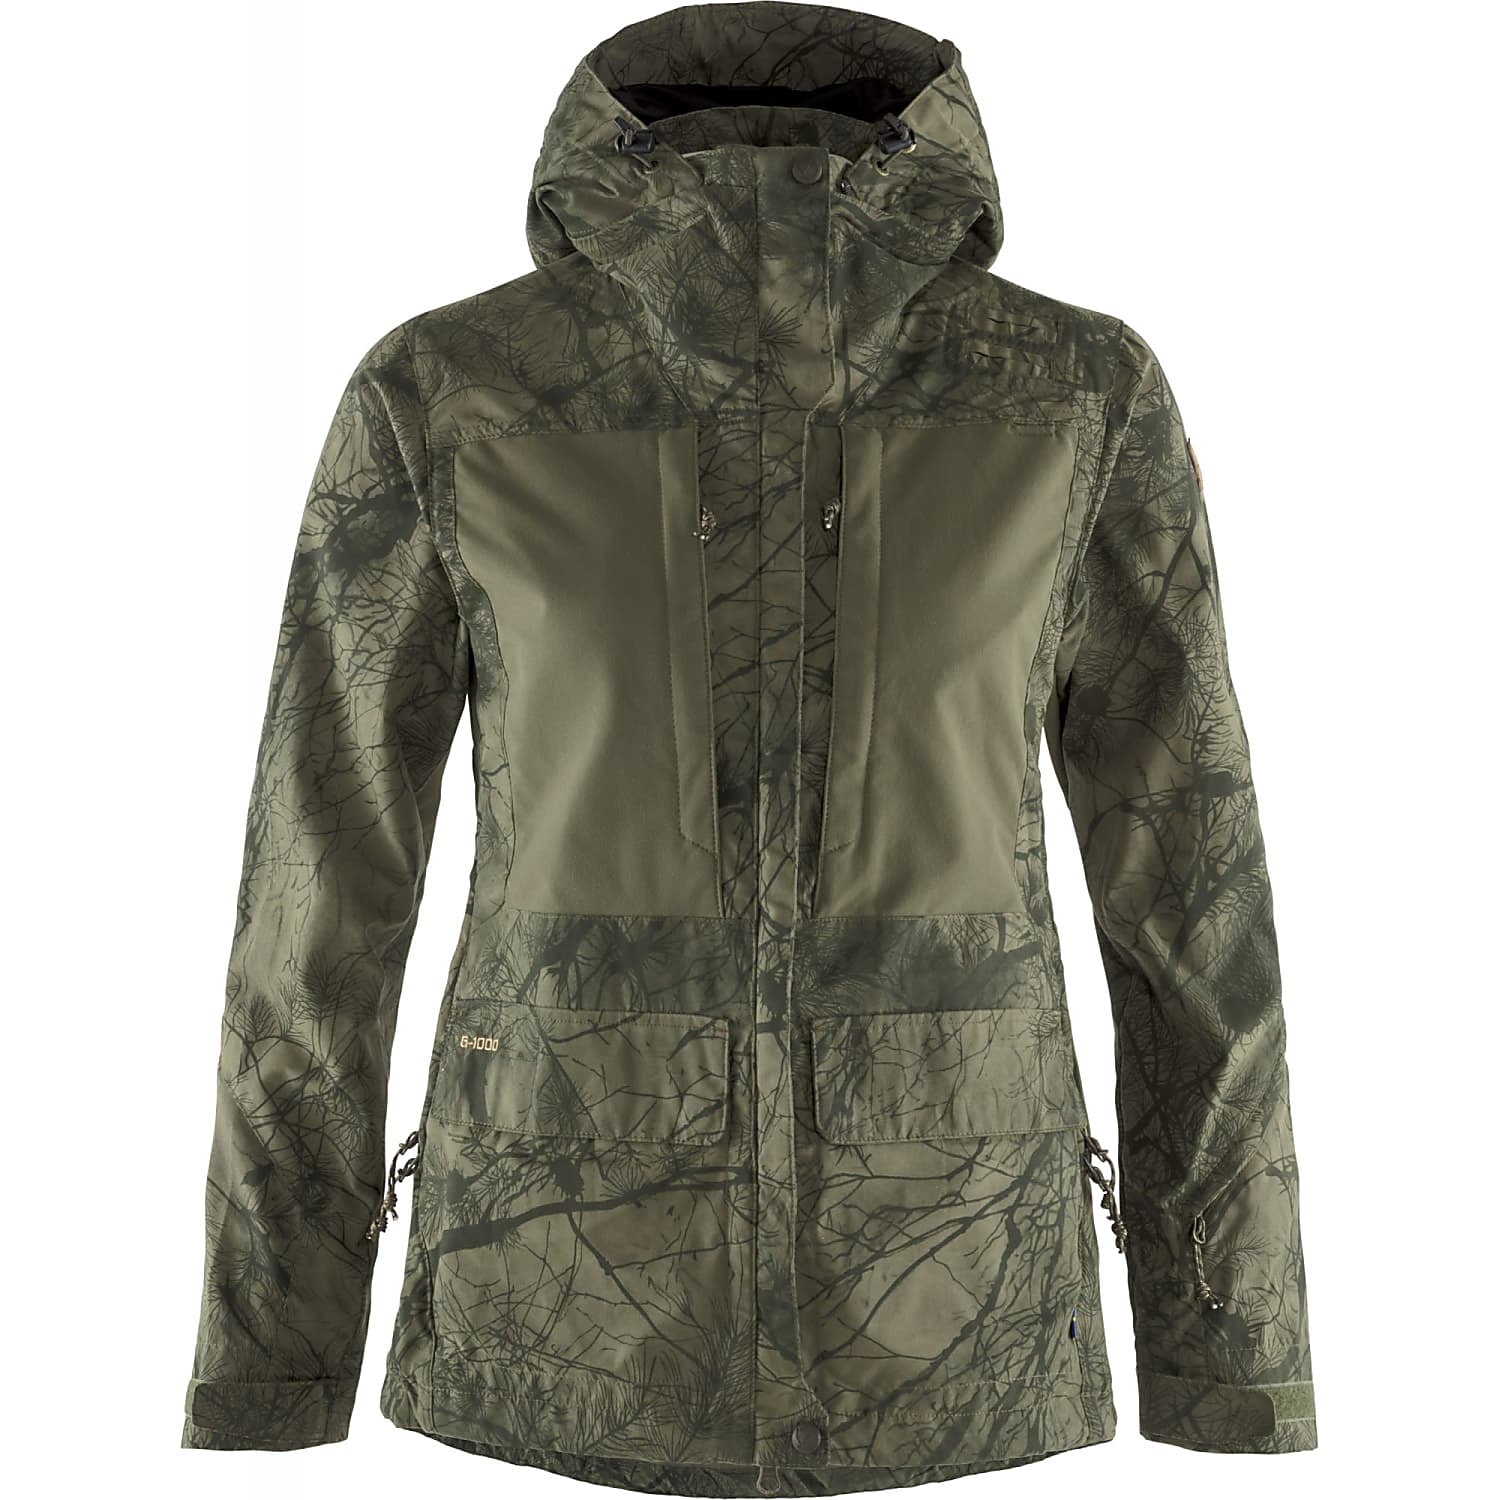 fjallraven hunting jacket